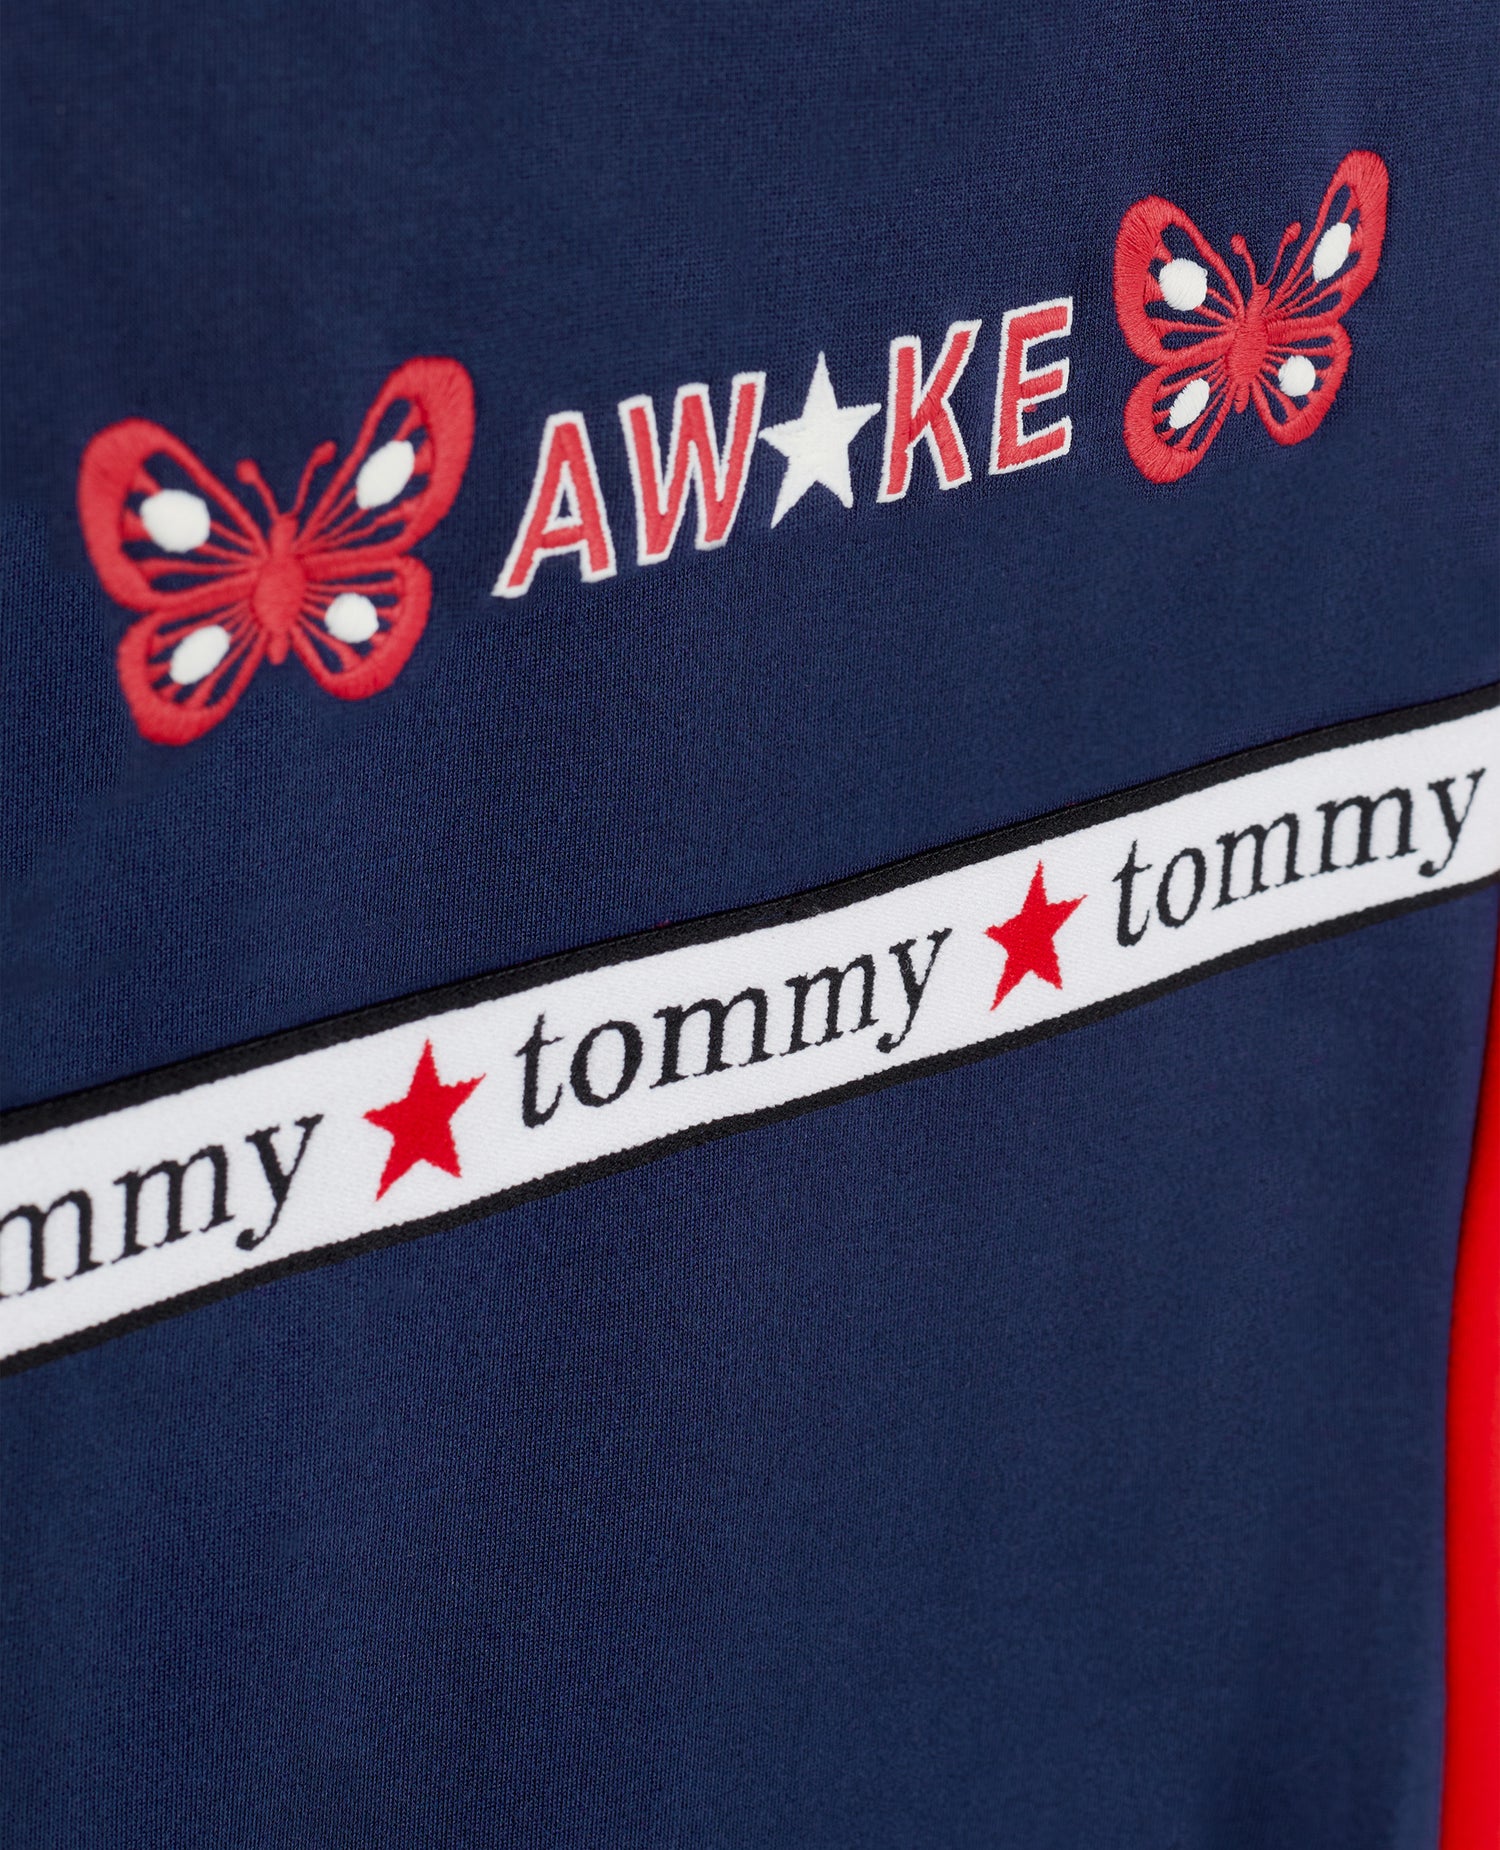 Tommy X Awake Dress (Yale Navy)